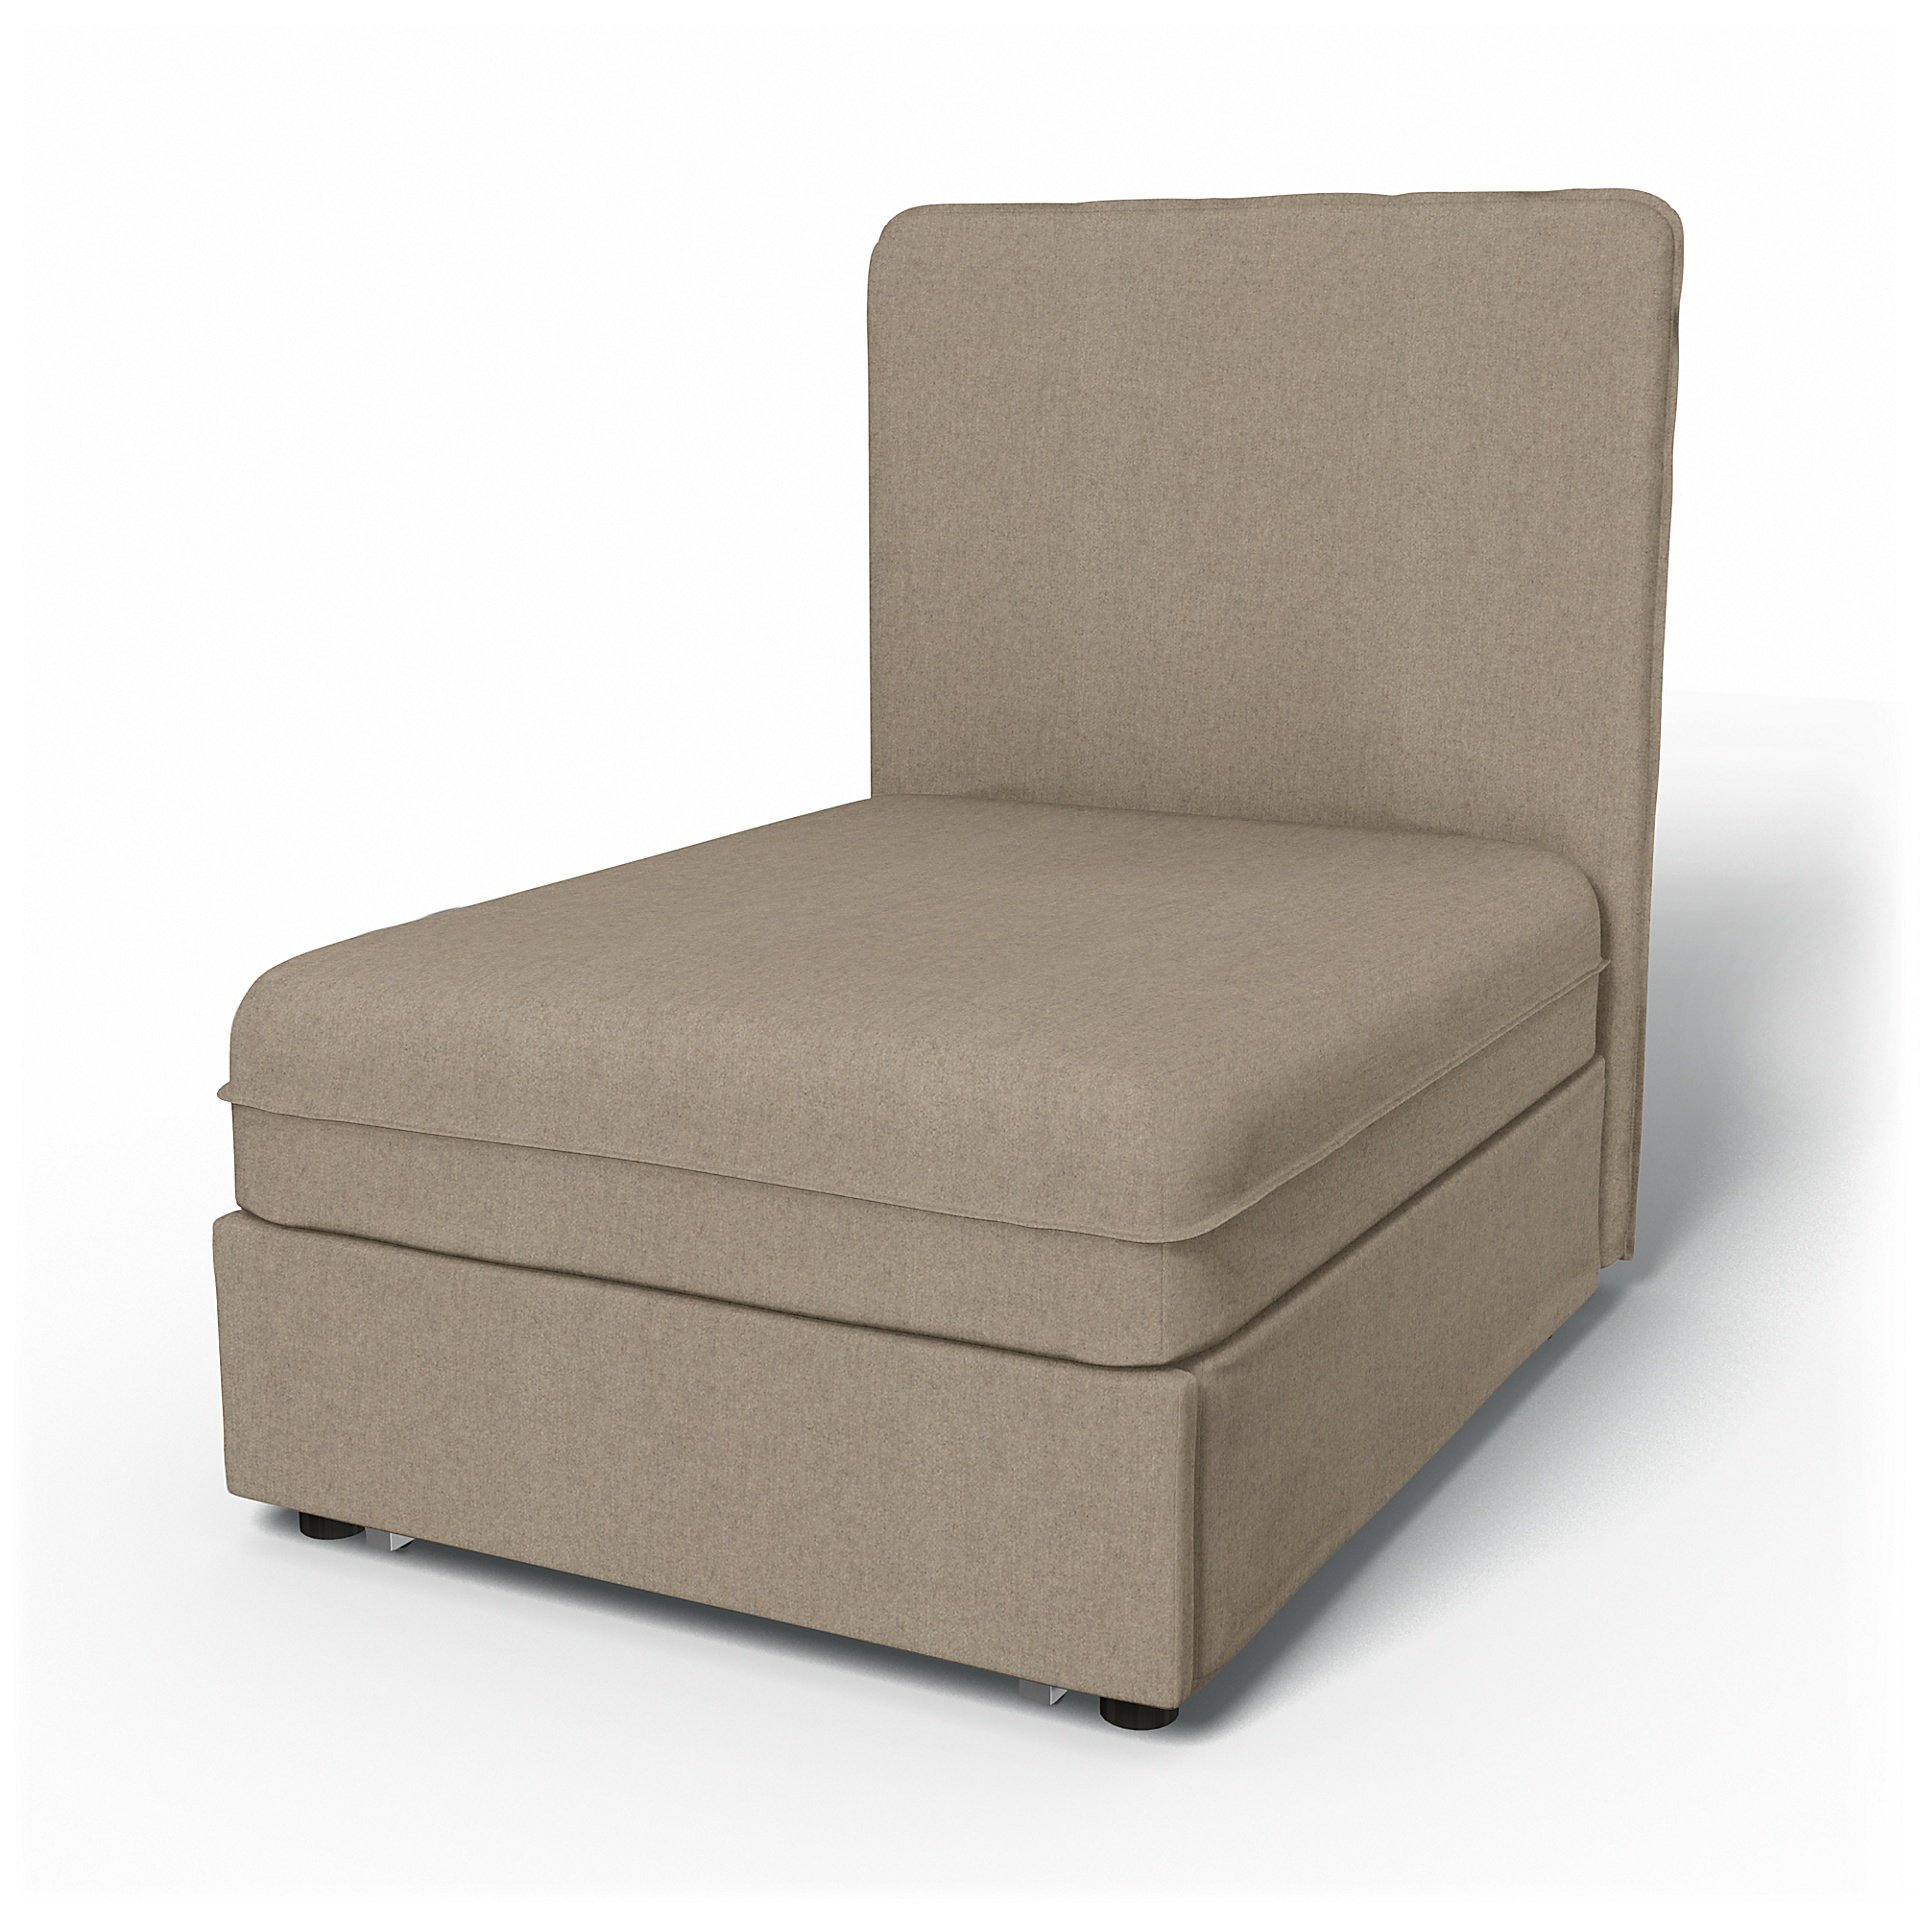 IKEA - Vallentuna Seat Module with High Back Sofa Bed Cover (80x100x46cm), Birch, Wool - Bemz